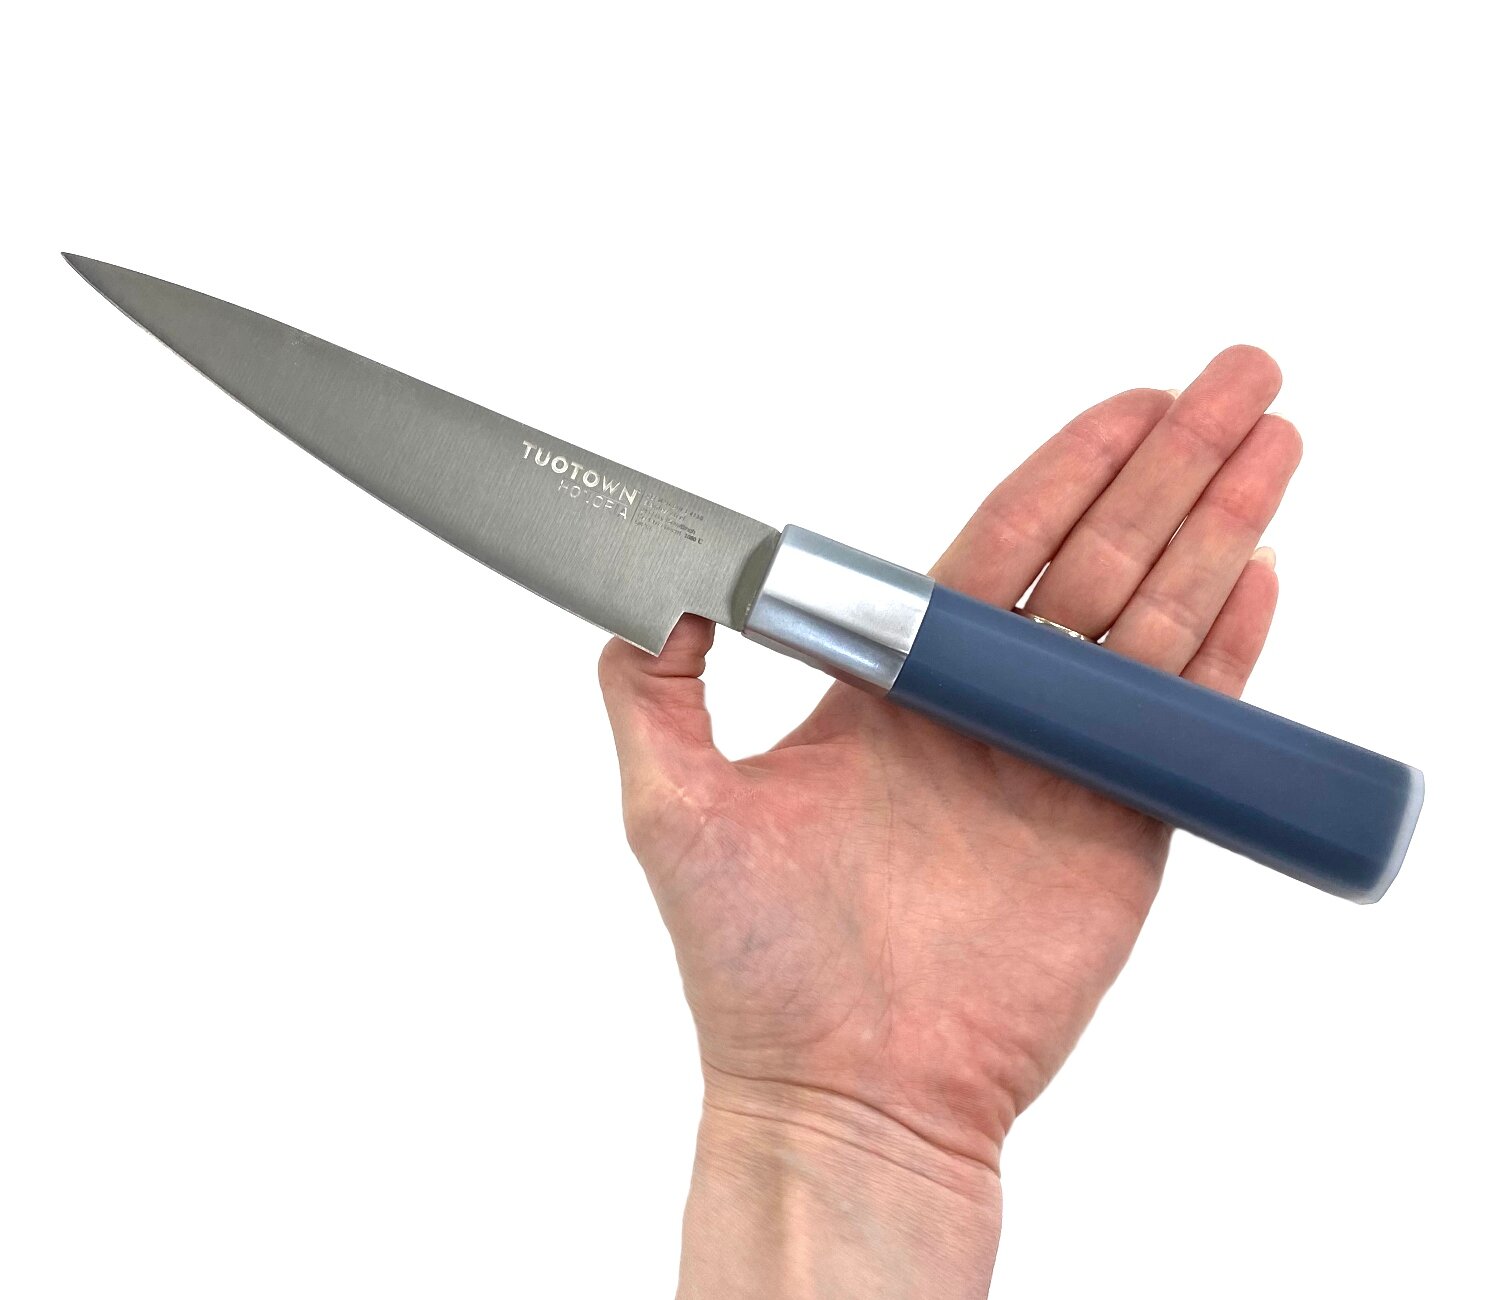 Кухонный нож TuoTown Honoria Utility 15 см, сталь German 1.4116, рукоять ABS, силикон, арт.136009